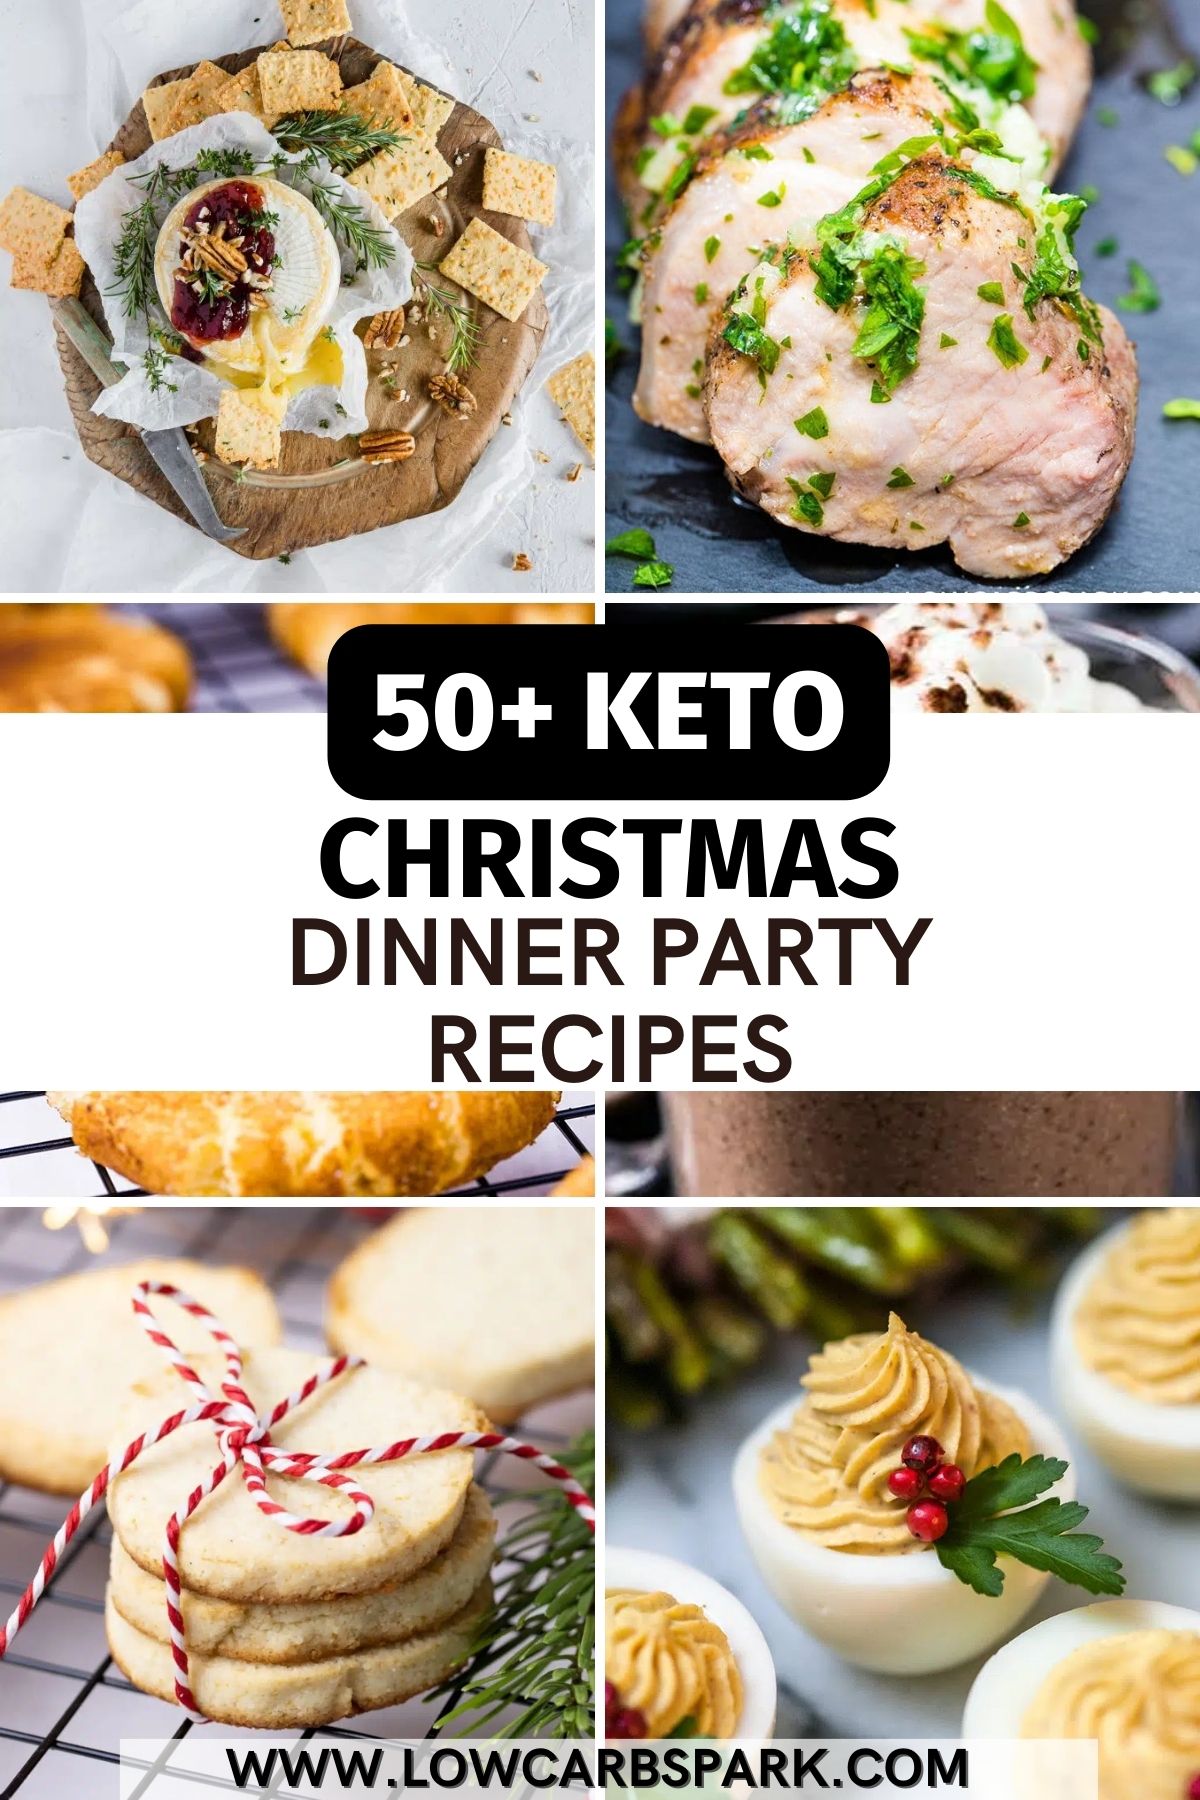 Keto Christmas Dinner Party Menu (50+ Recipes!)